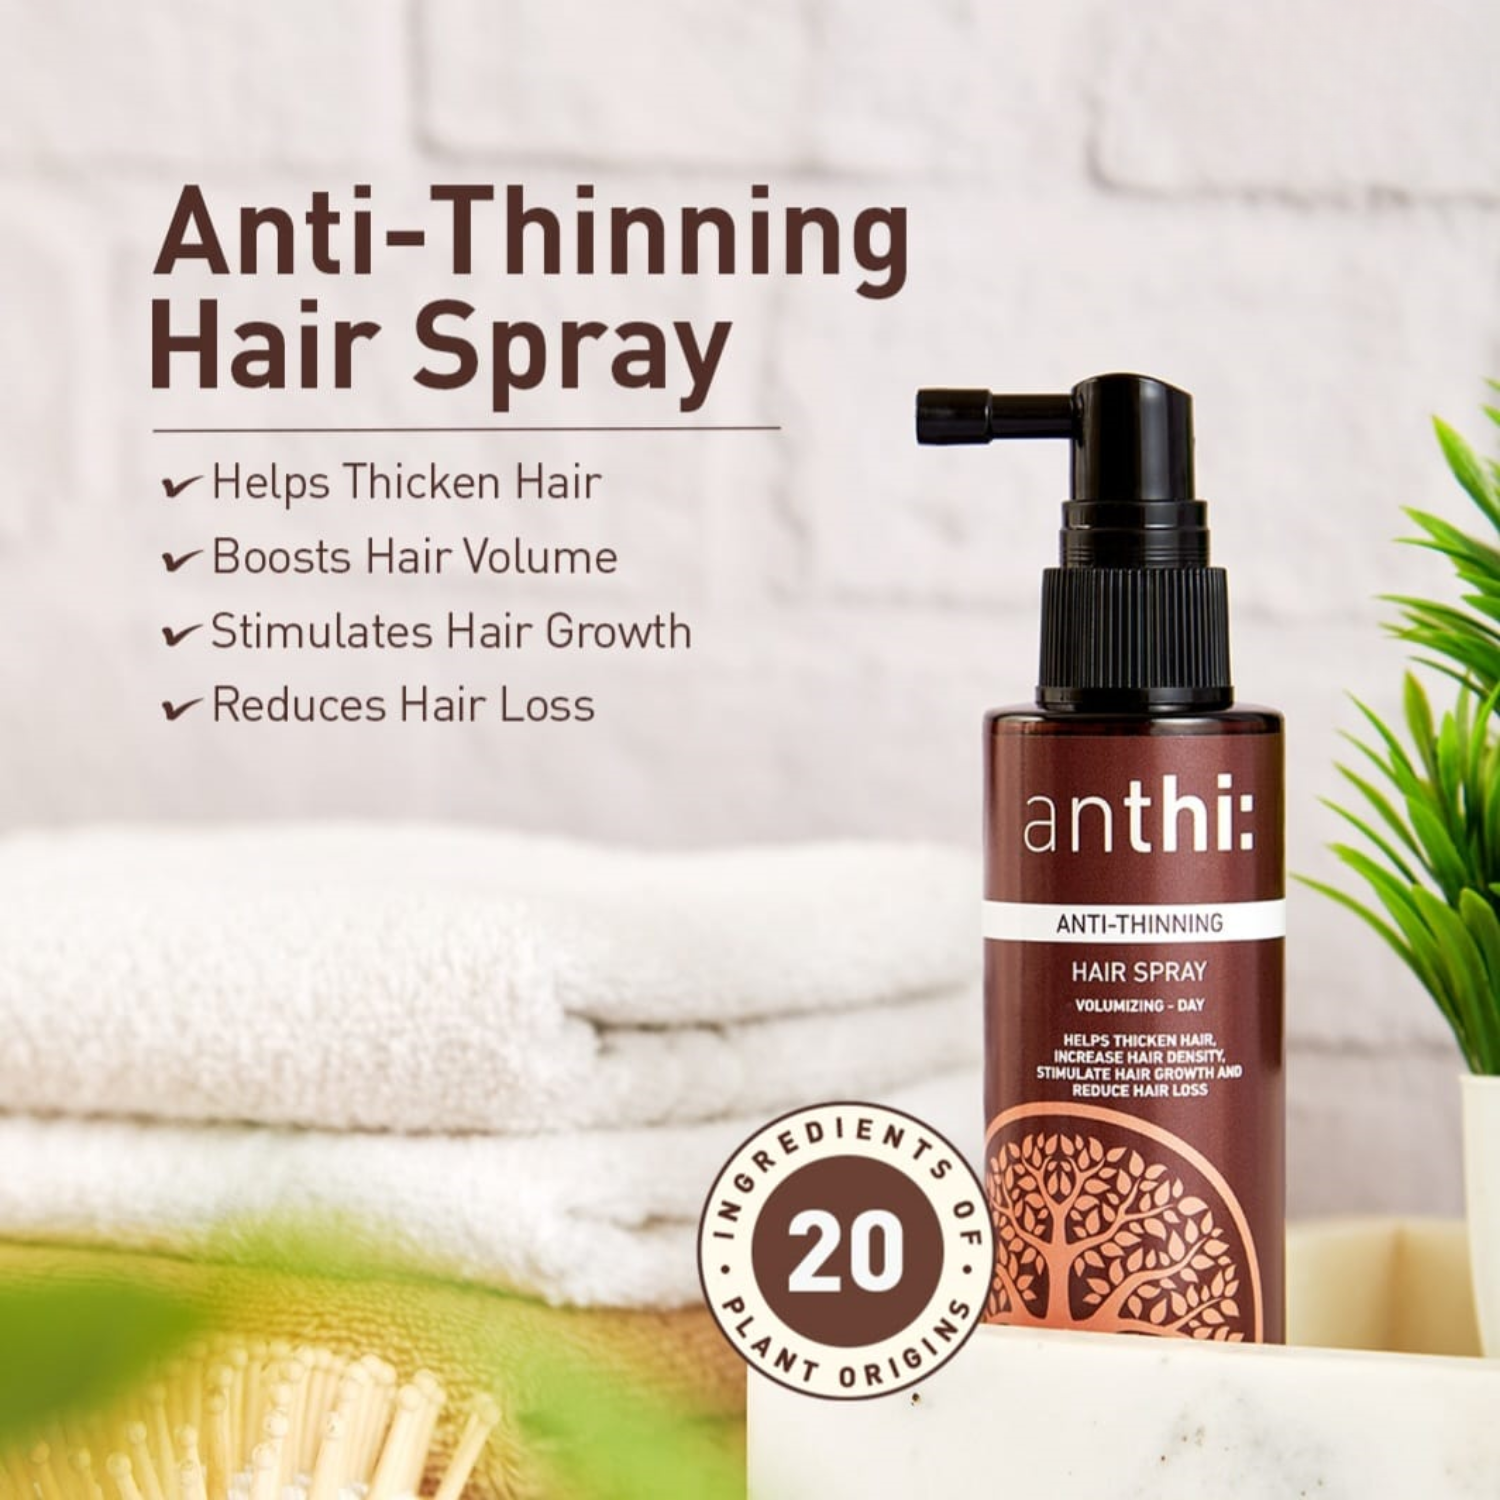 Anti-Thinning Hair Spray Benefits